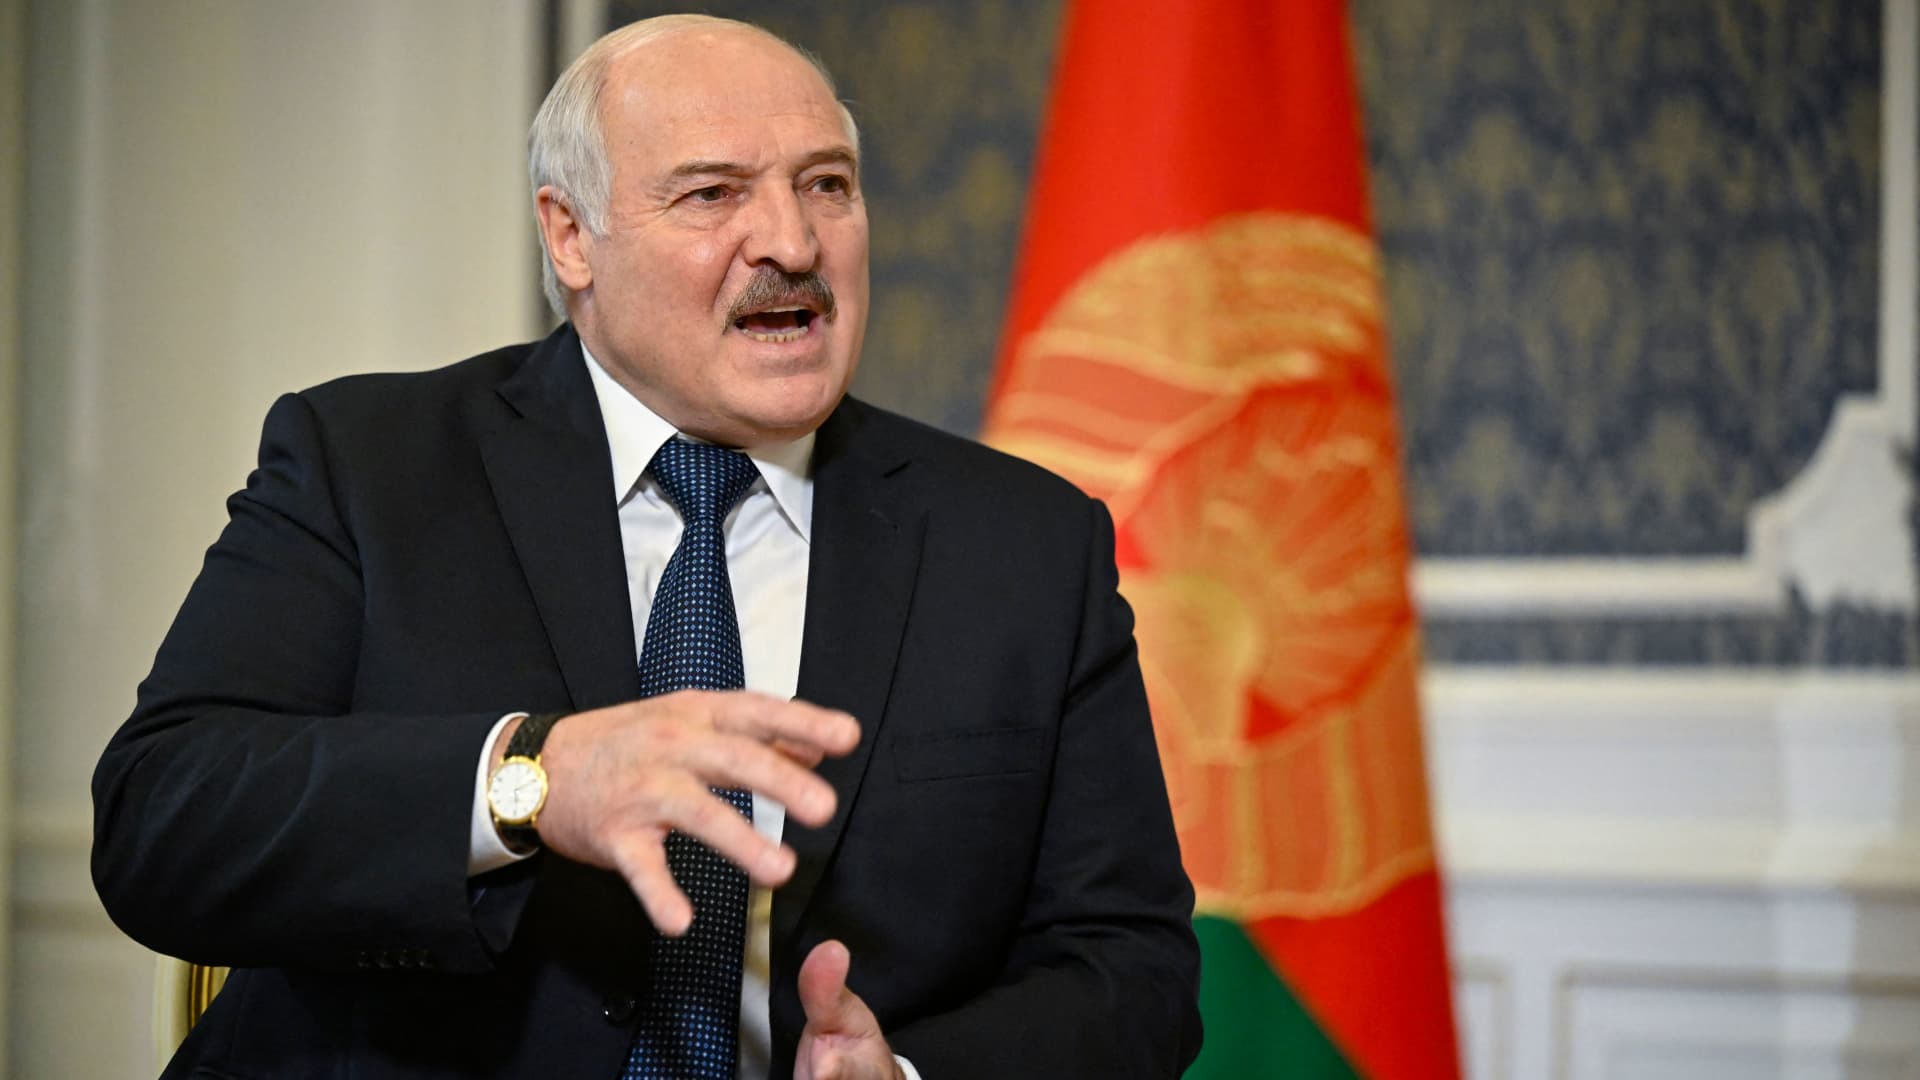 Lukashenko is a close ally of Russian President Vladimir Putin.